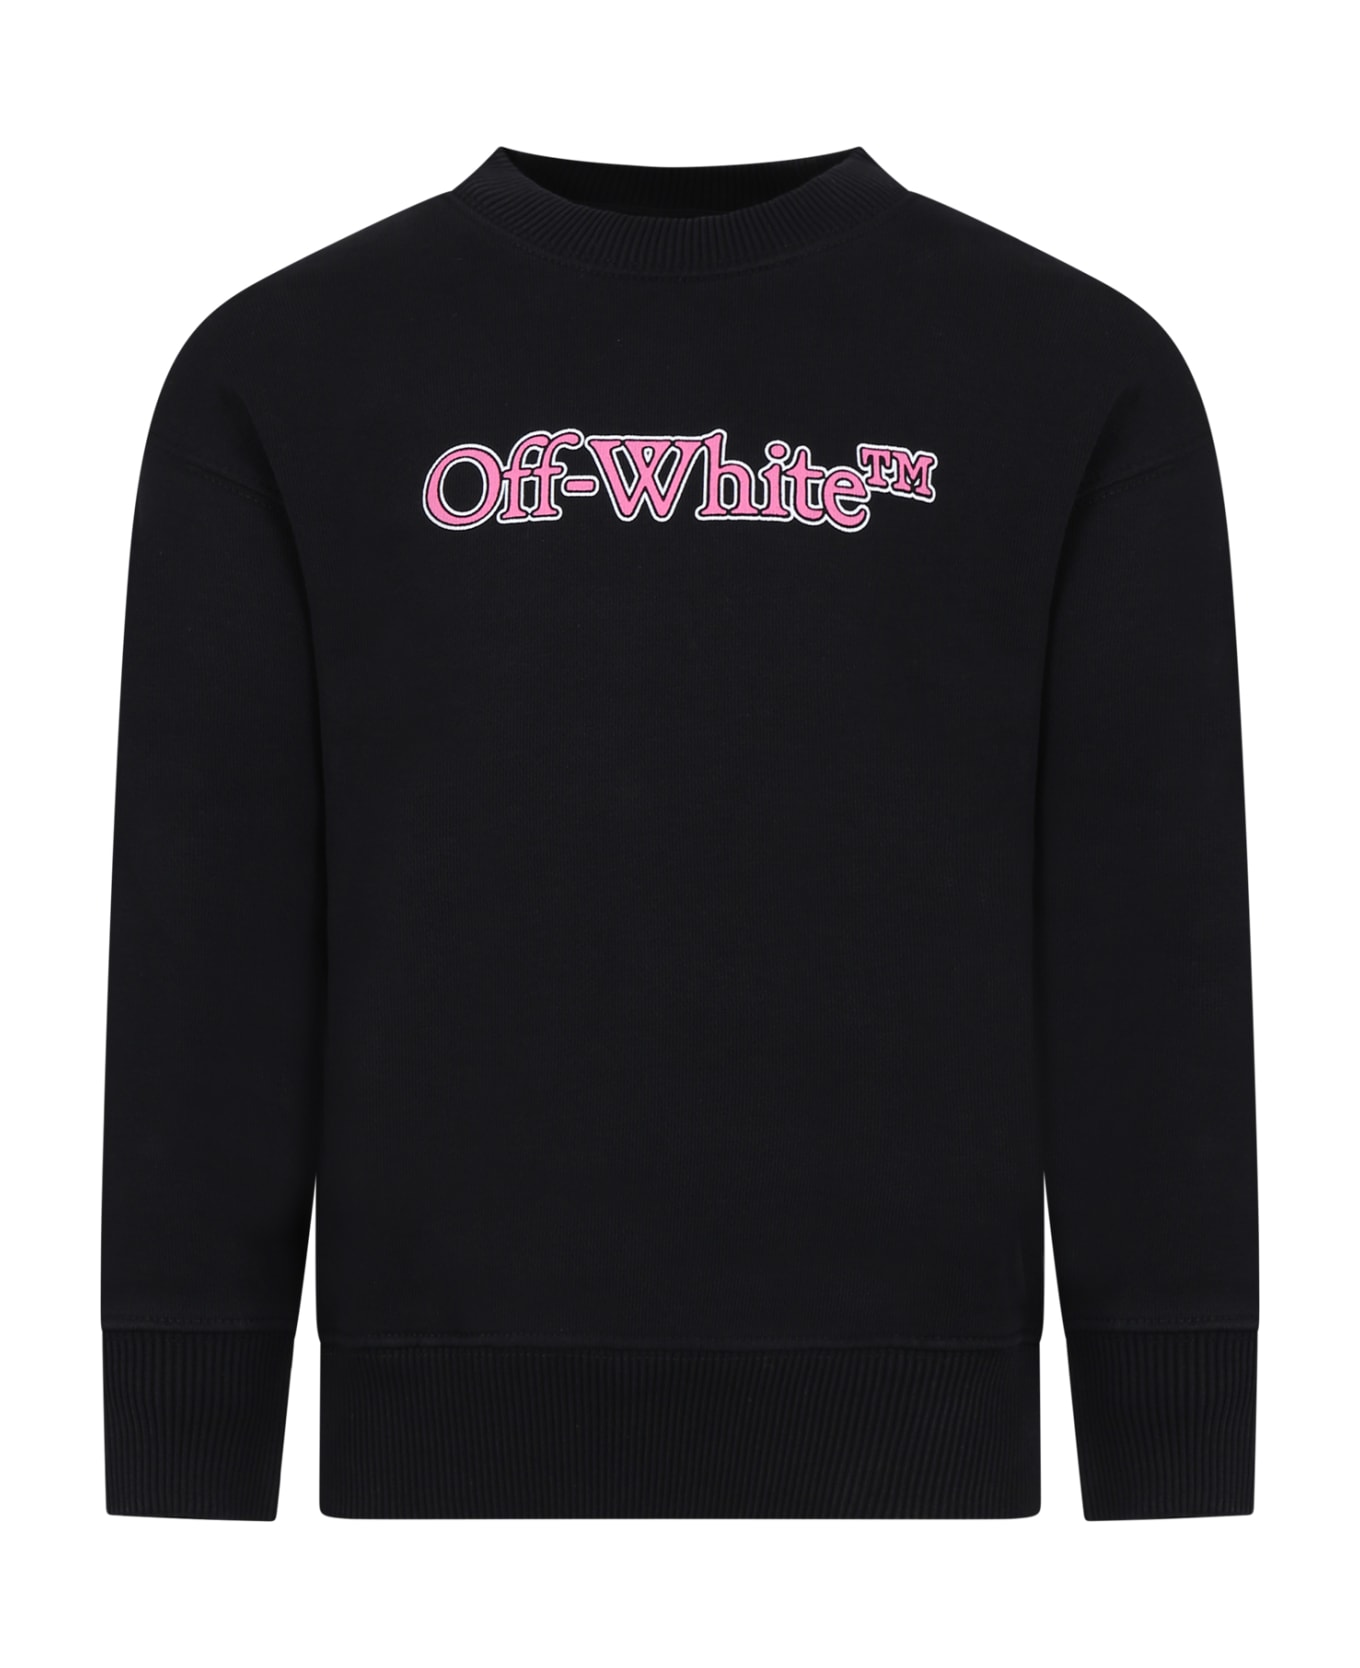 Off-White Black Sweatshirt For Girl With Logo - Black